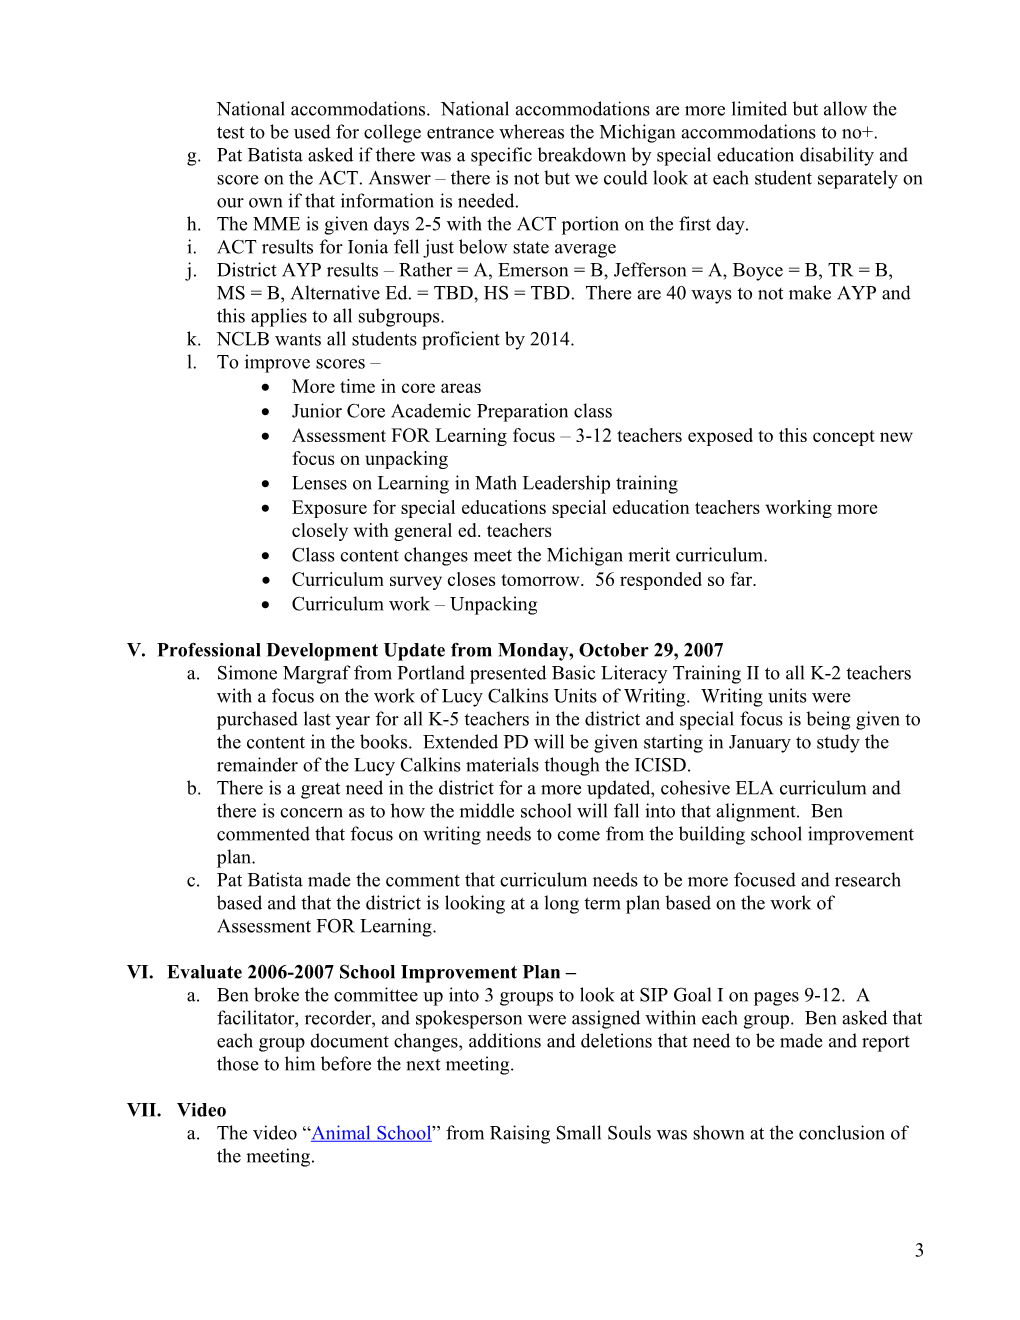 DSI/CC Meeting Minutes